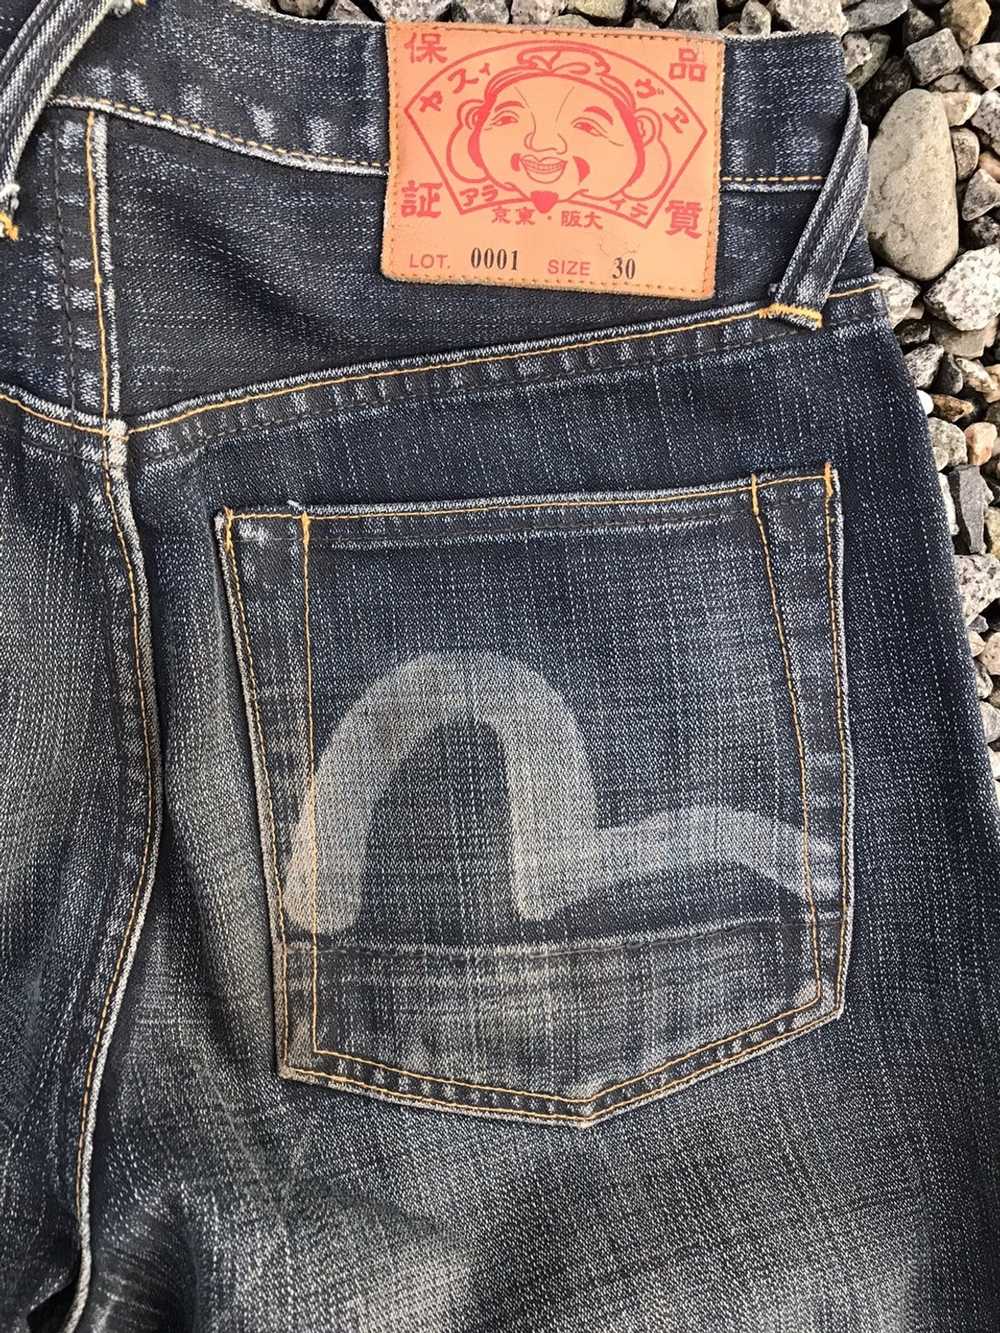 Evisu × Japanese Brand × Vintage Evisu jeans deni… - image 2